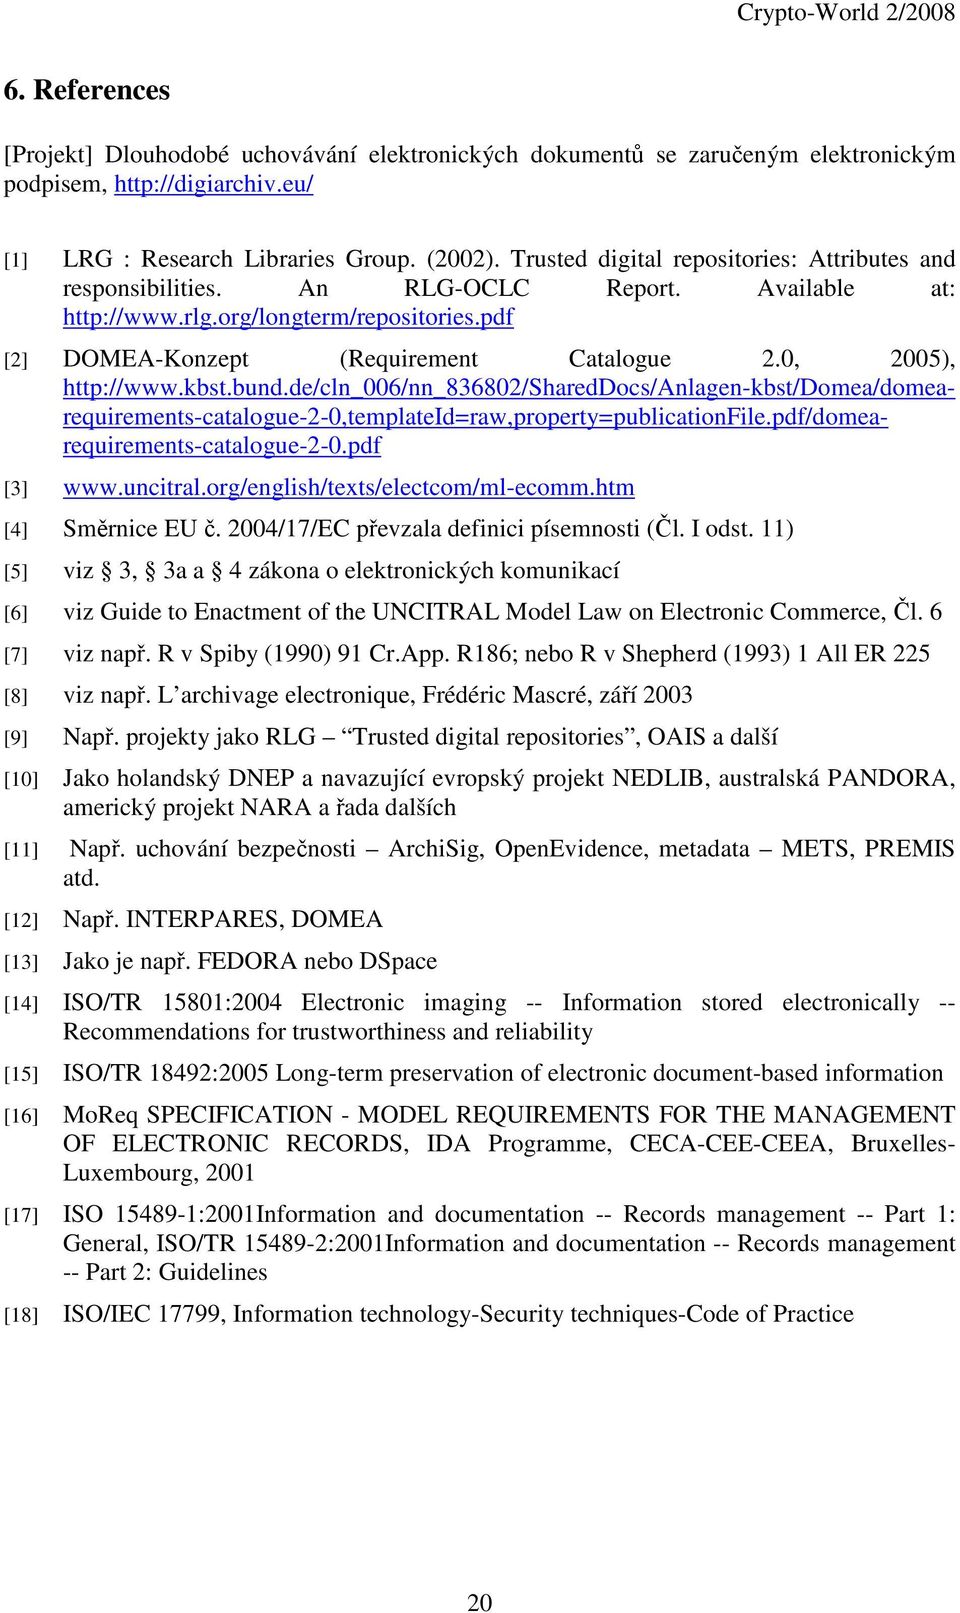 0, 2005), http://www.kbst.bund.de/cln_006/nn_836802/shareddocs/anlagen-kbst/domea/domearequirements-catalogue-2-0,templateid=raw,property=publicationfile.pdf/domearequirements-catalogue-2-0.